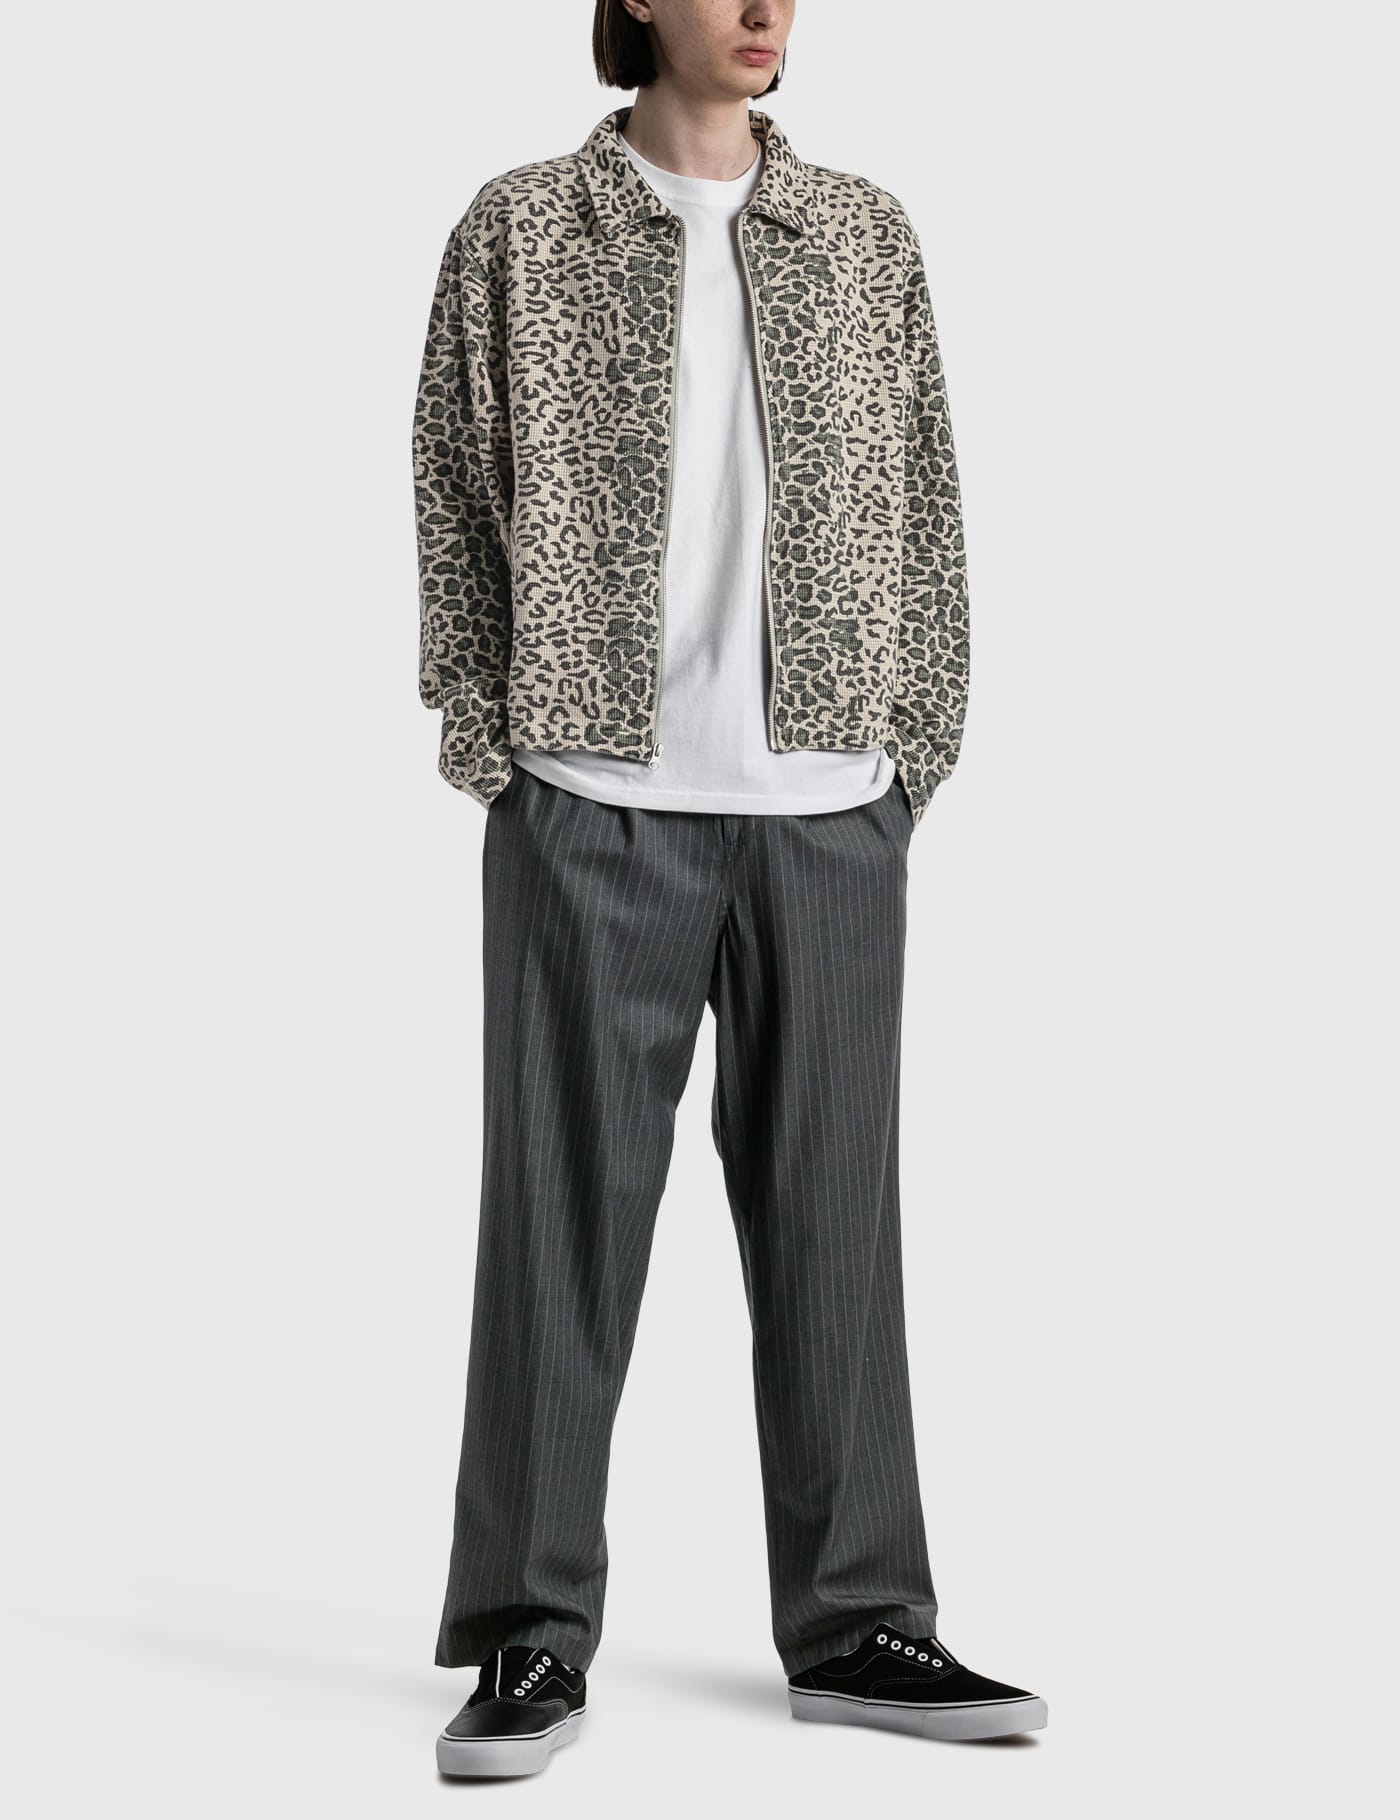 Stüssy - Leopard Mesh Zip Jacket | HBX - Globally Curated Fashion